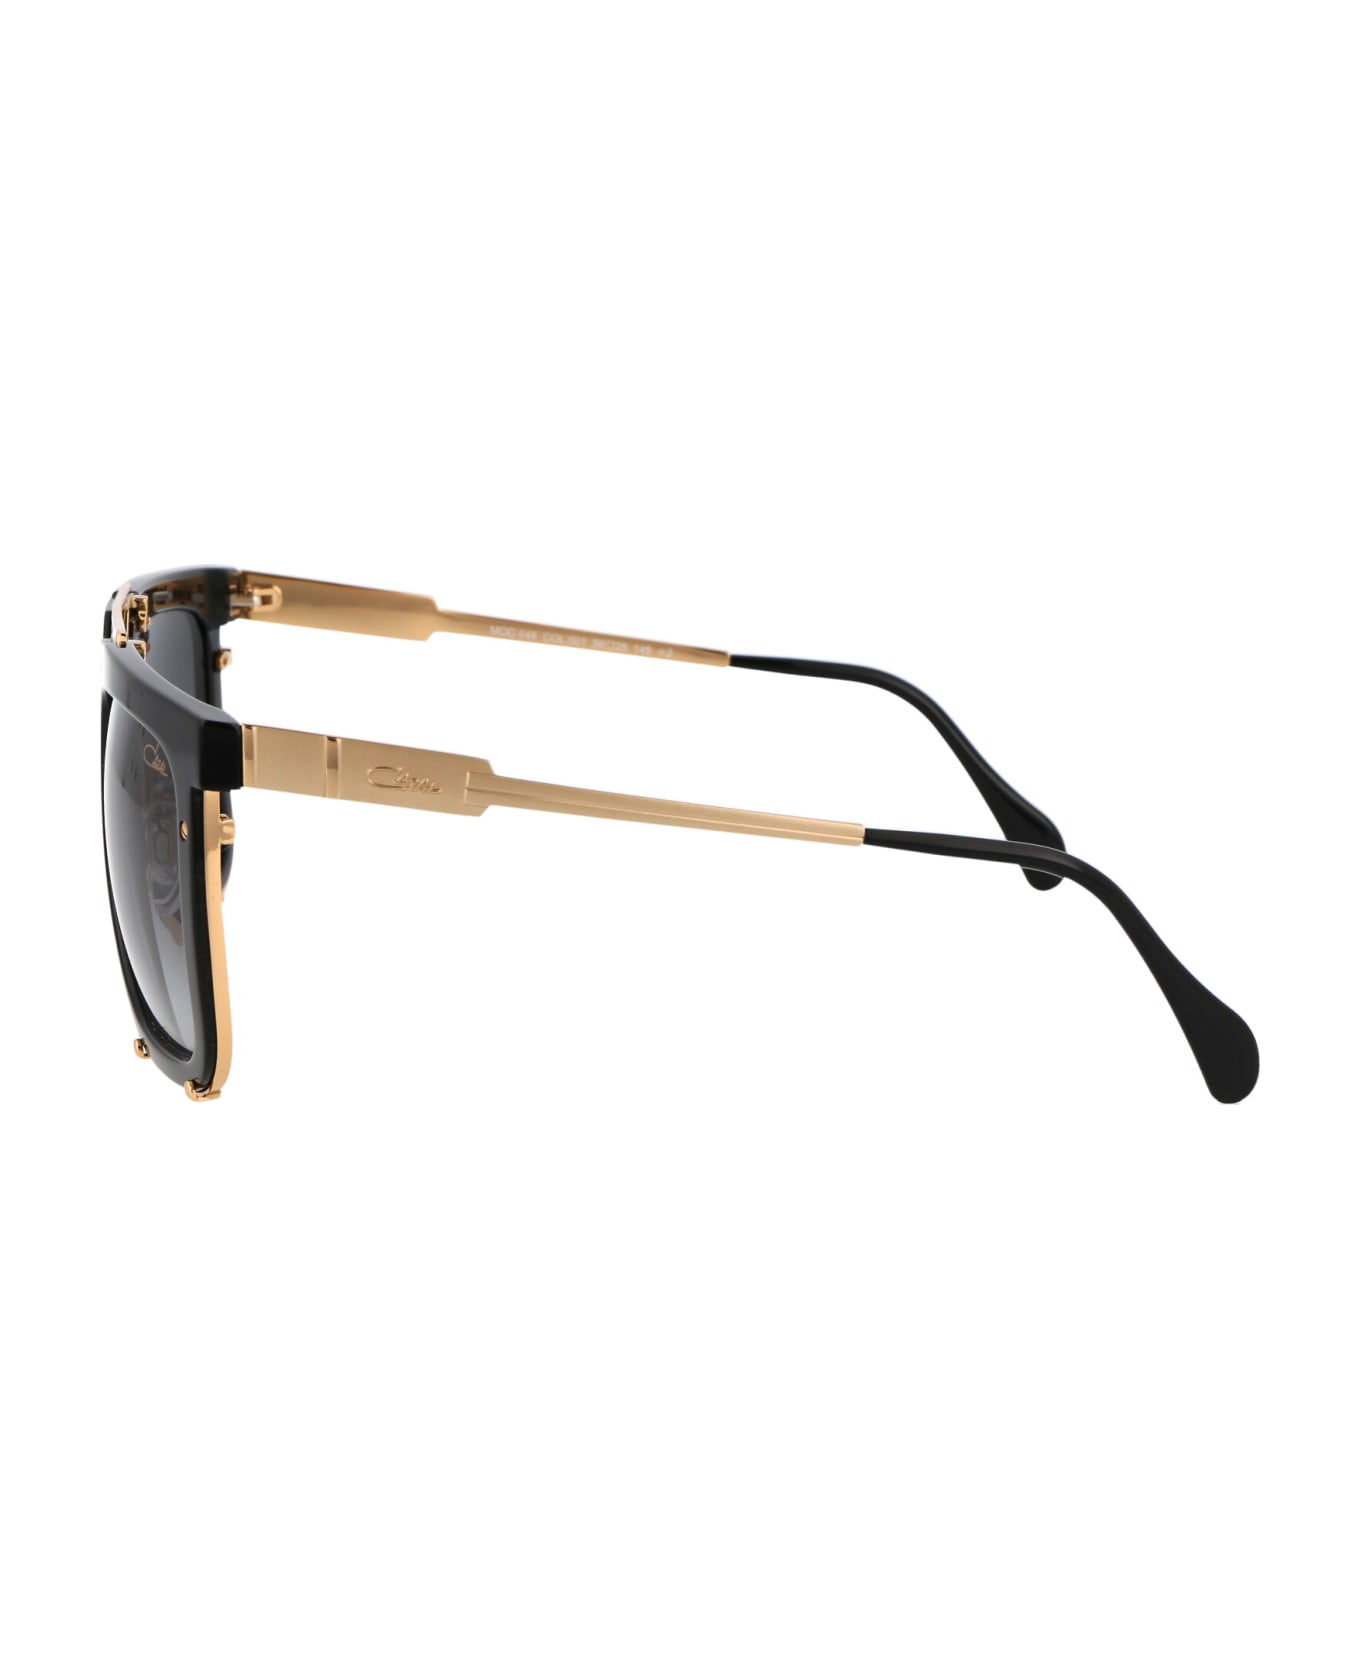 Cazal Mod. 648 Sunglasses - 001 GOLD BLACK